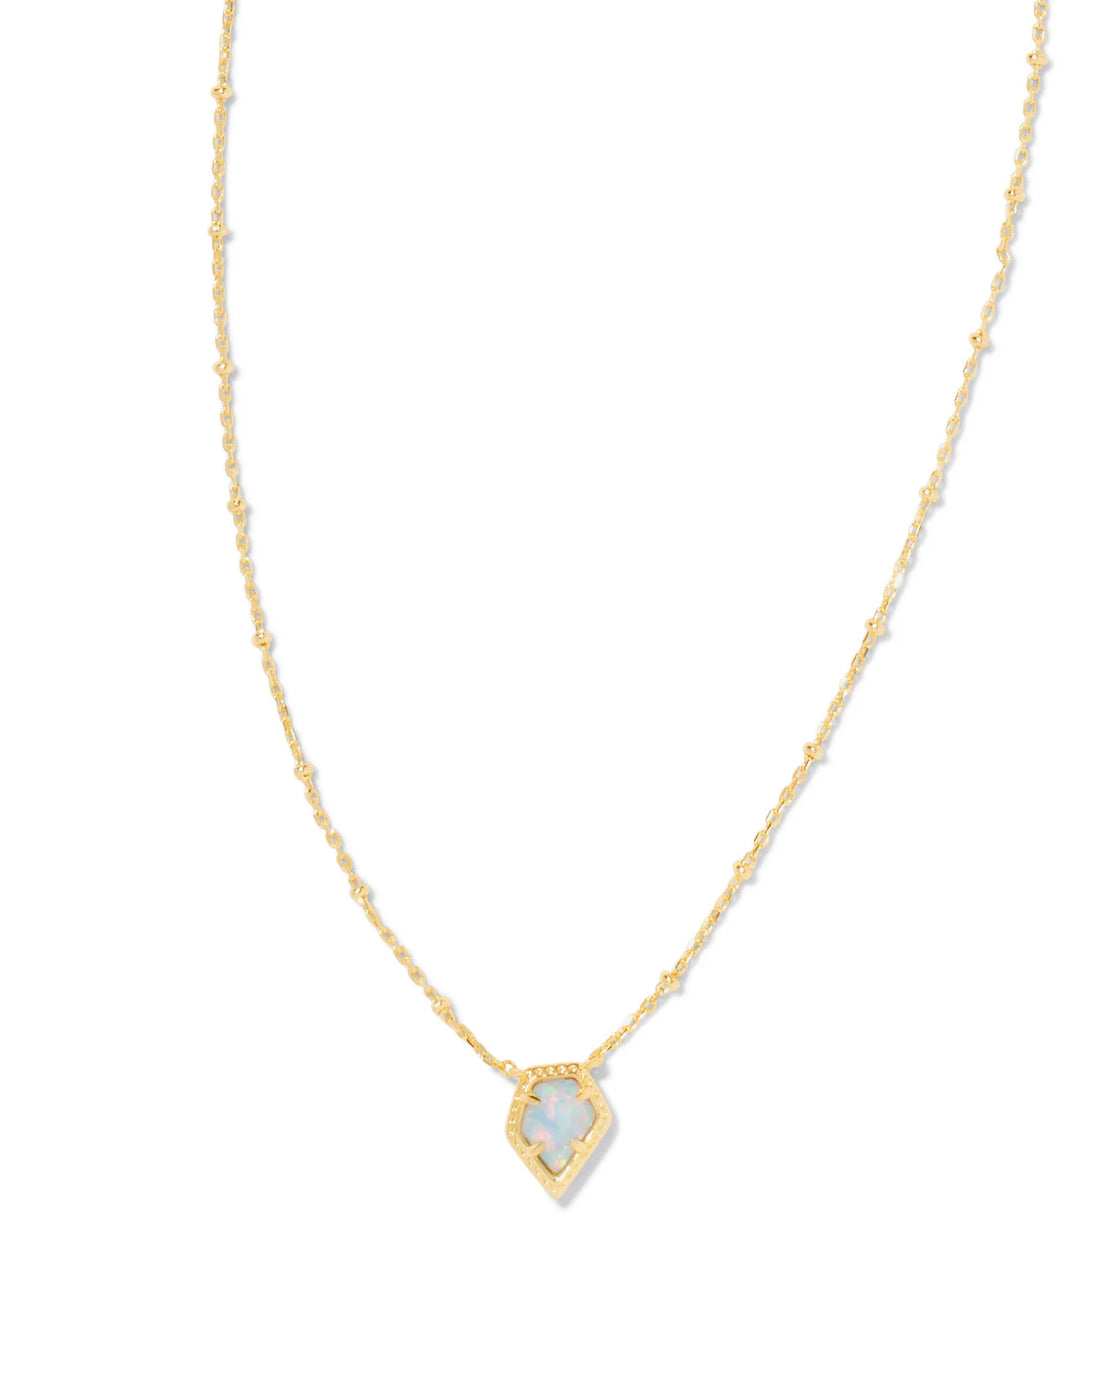 Framed Tess Satellite Short Pendant Necklace - GLD Luster Light Blue Kyocera Opal